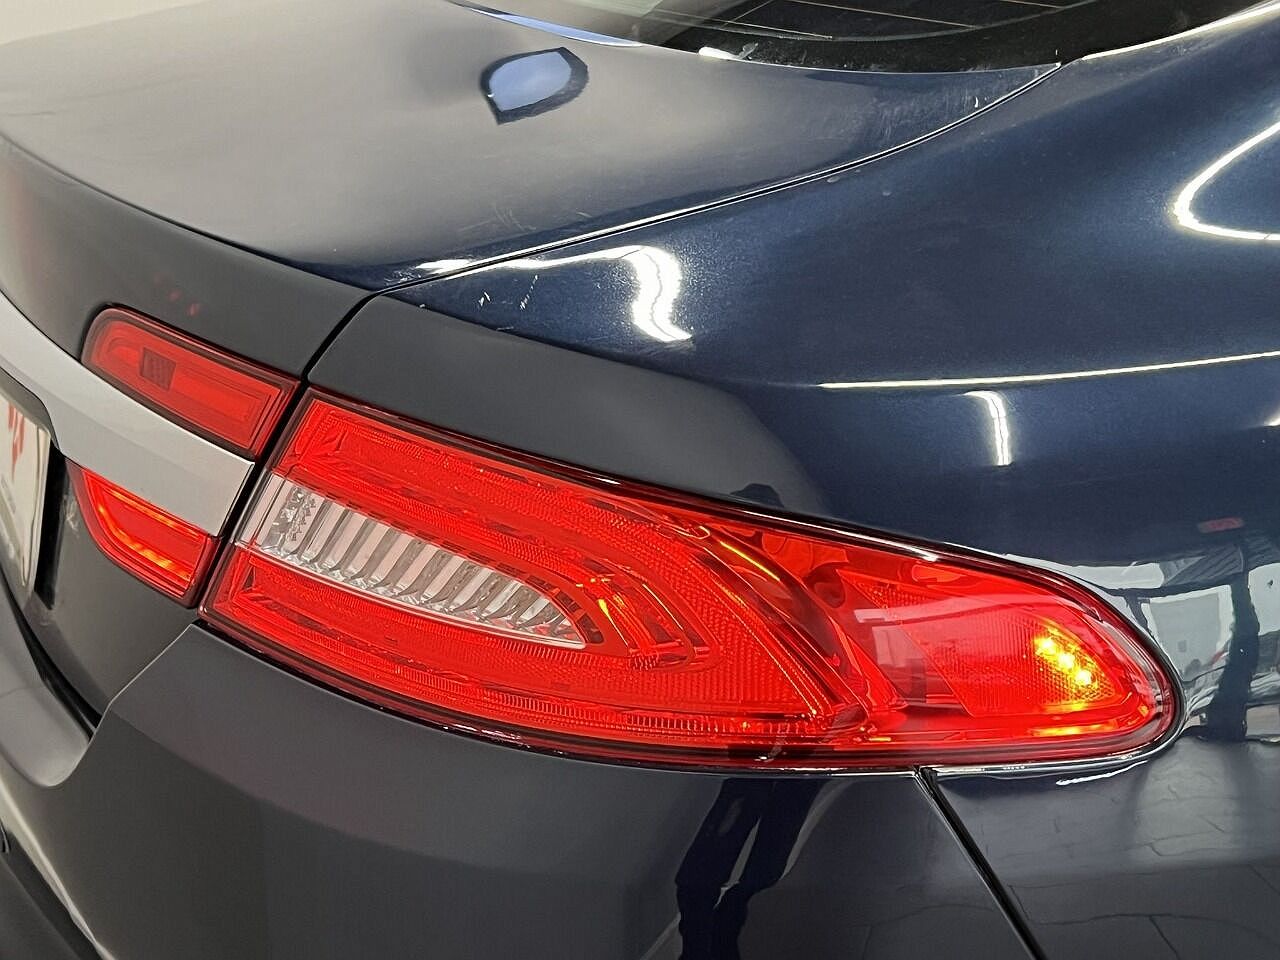 2012 Jaguar XF Portfolio image 57